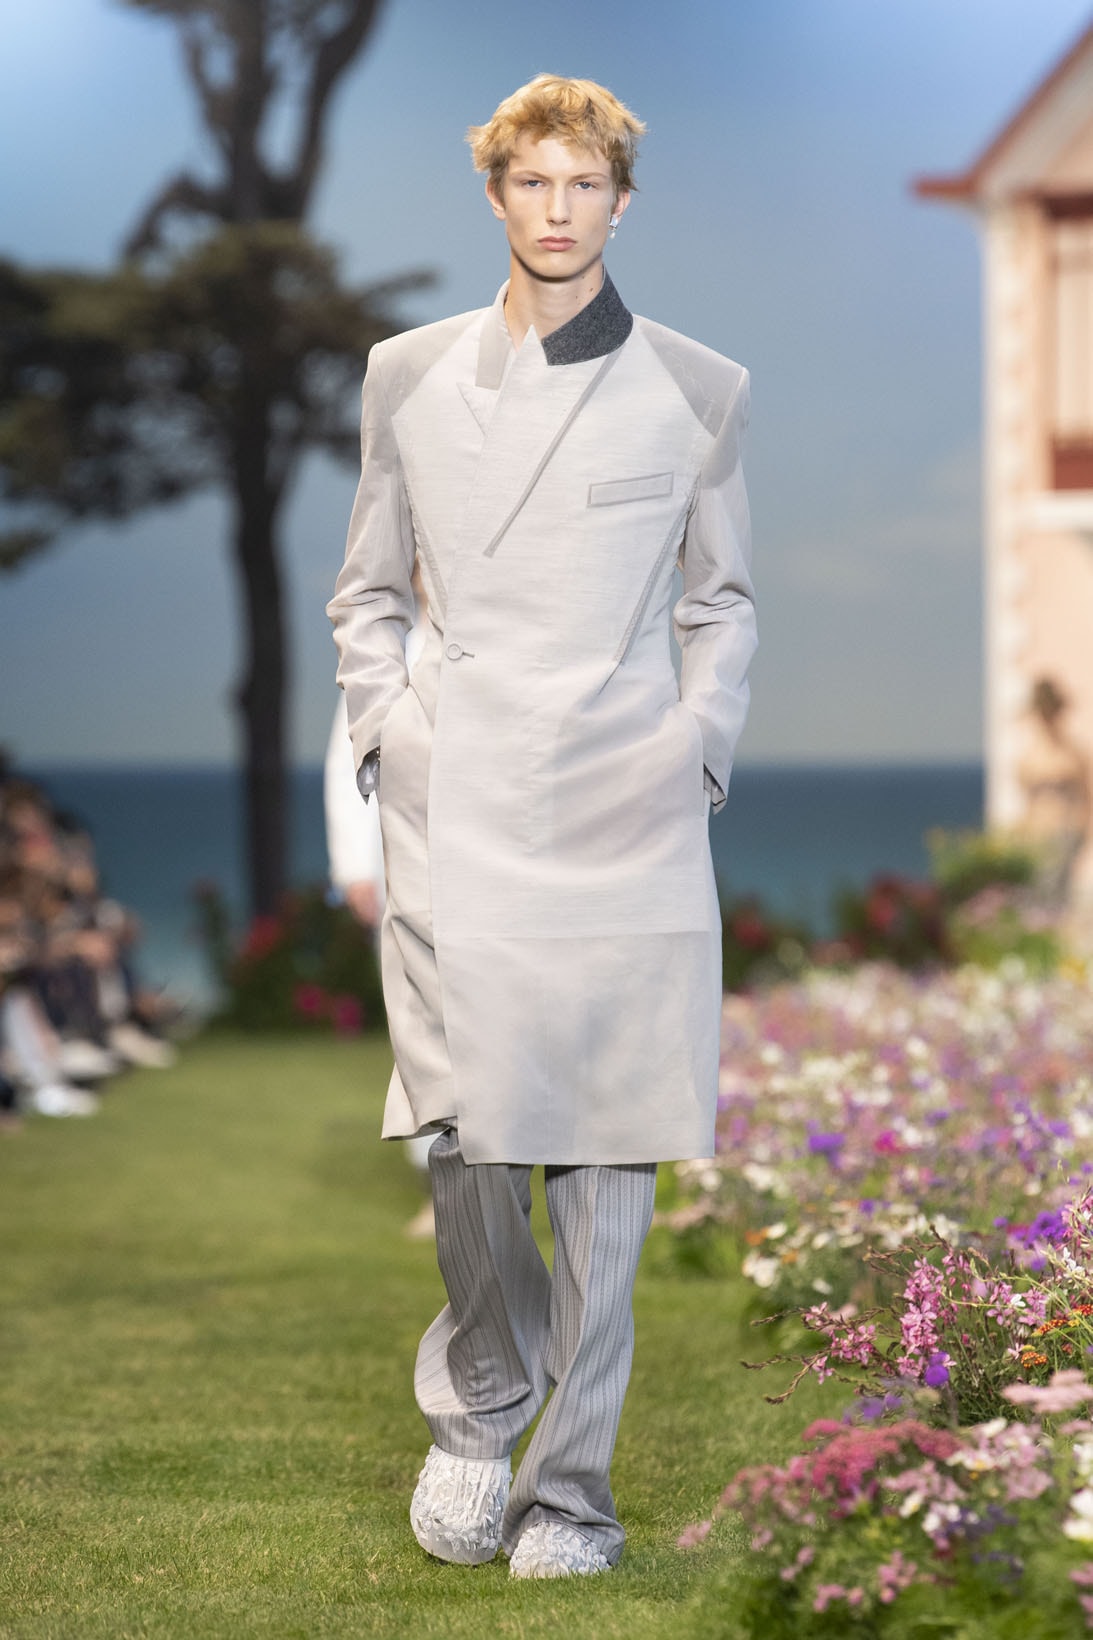 new DIOR MEN 2022 Kim Jones Couture grey embroidery logo white tshirt M